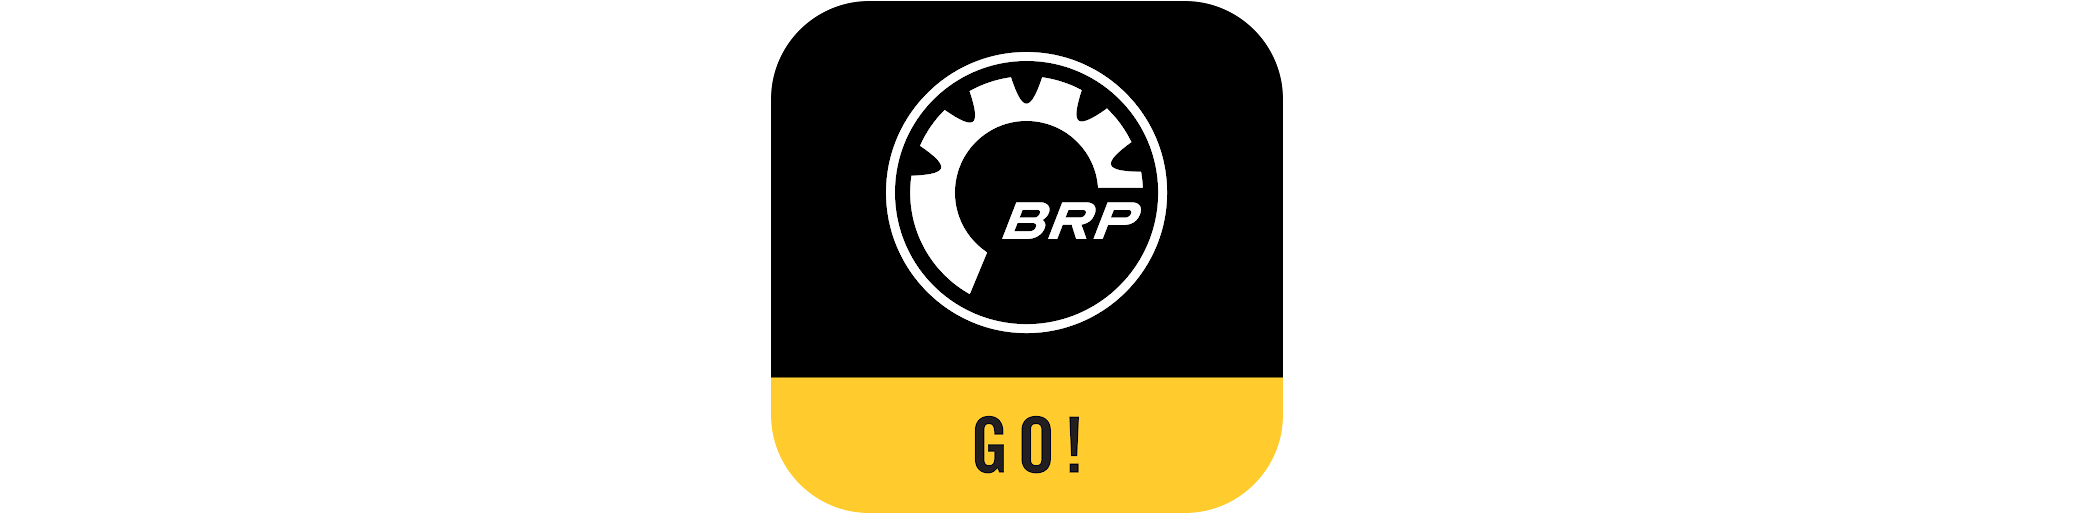 BRP GO! Logo